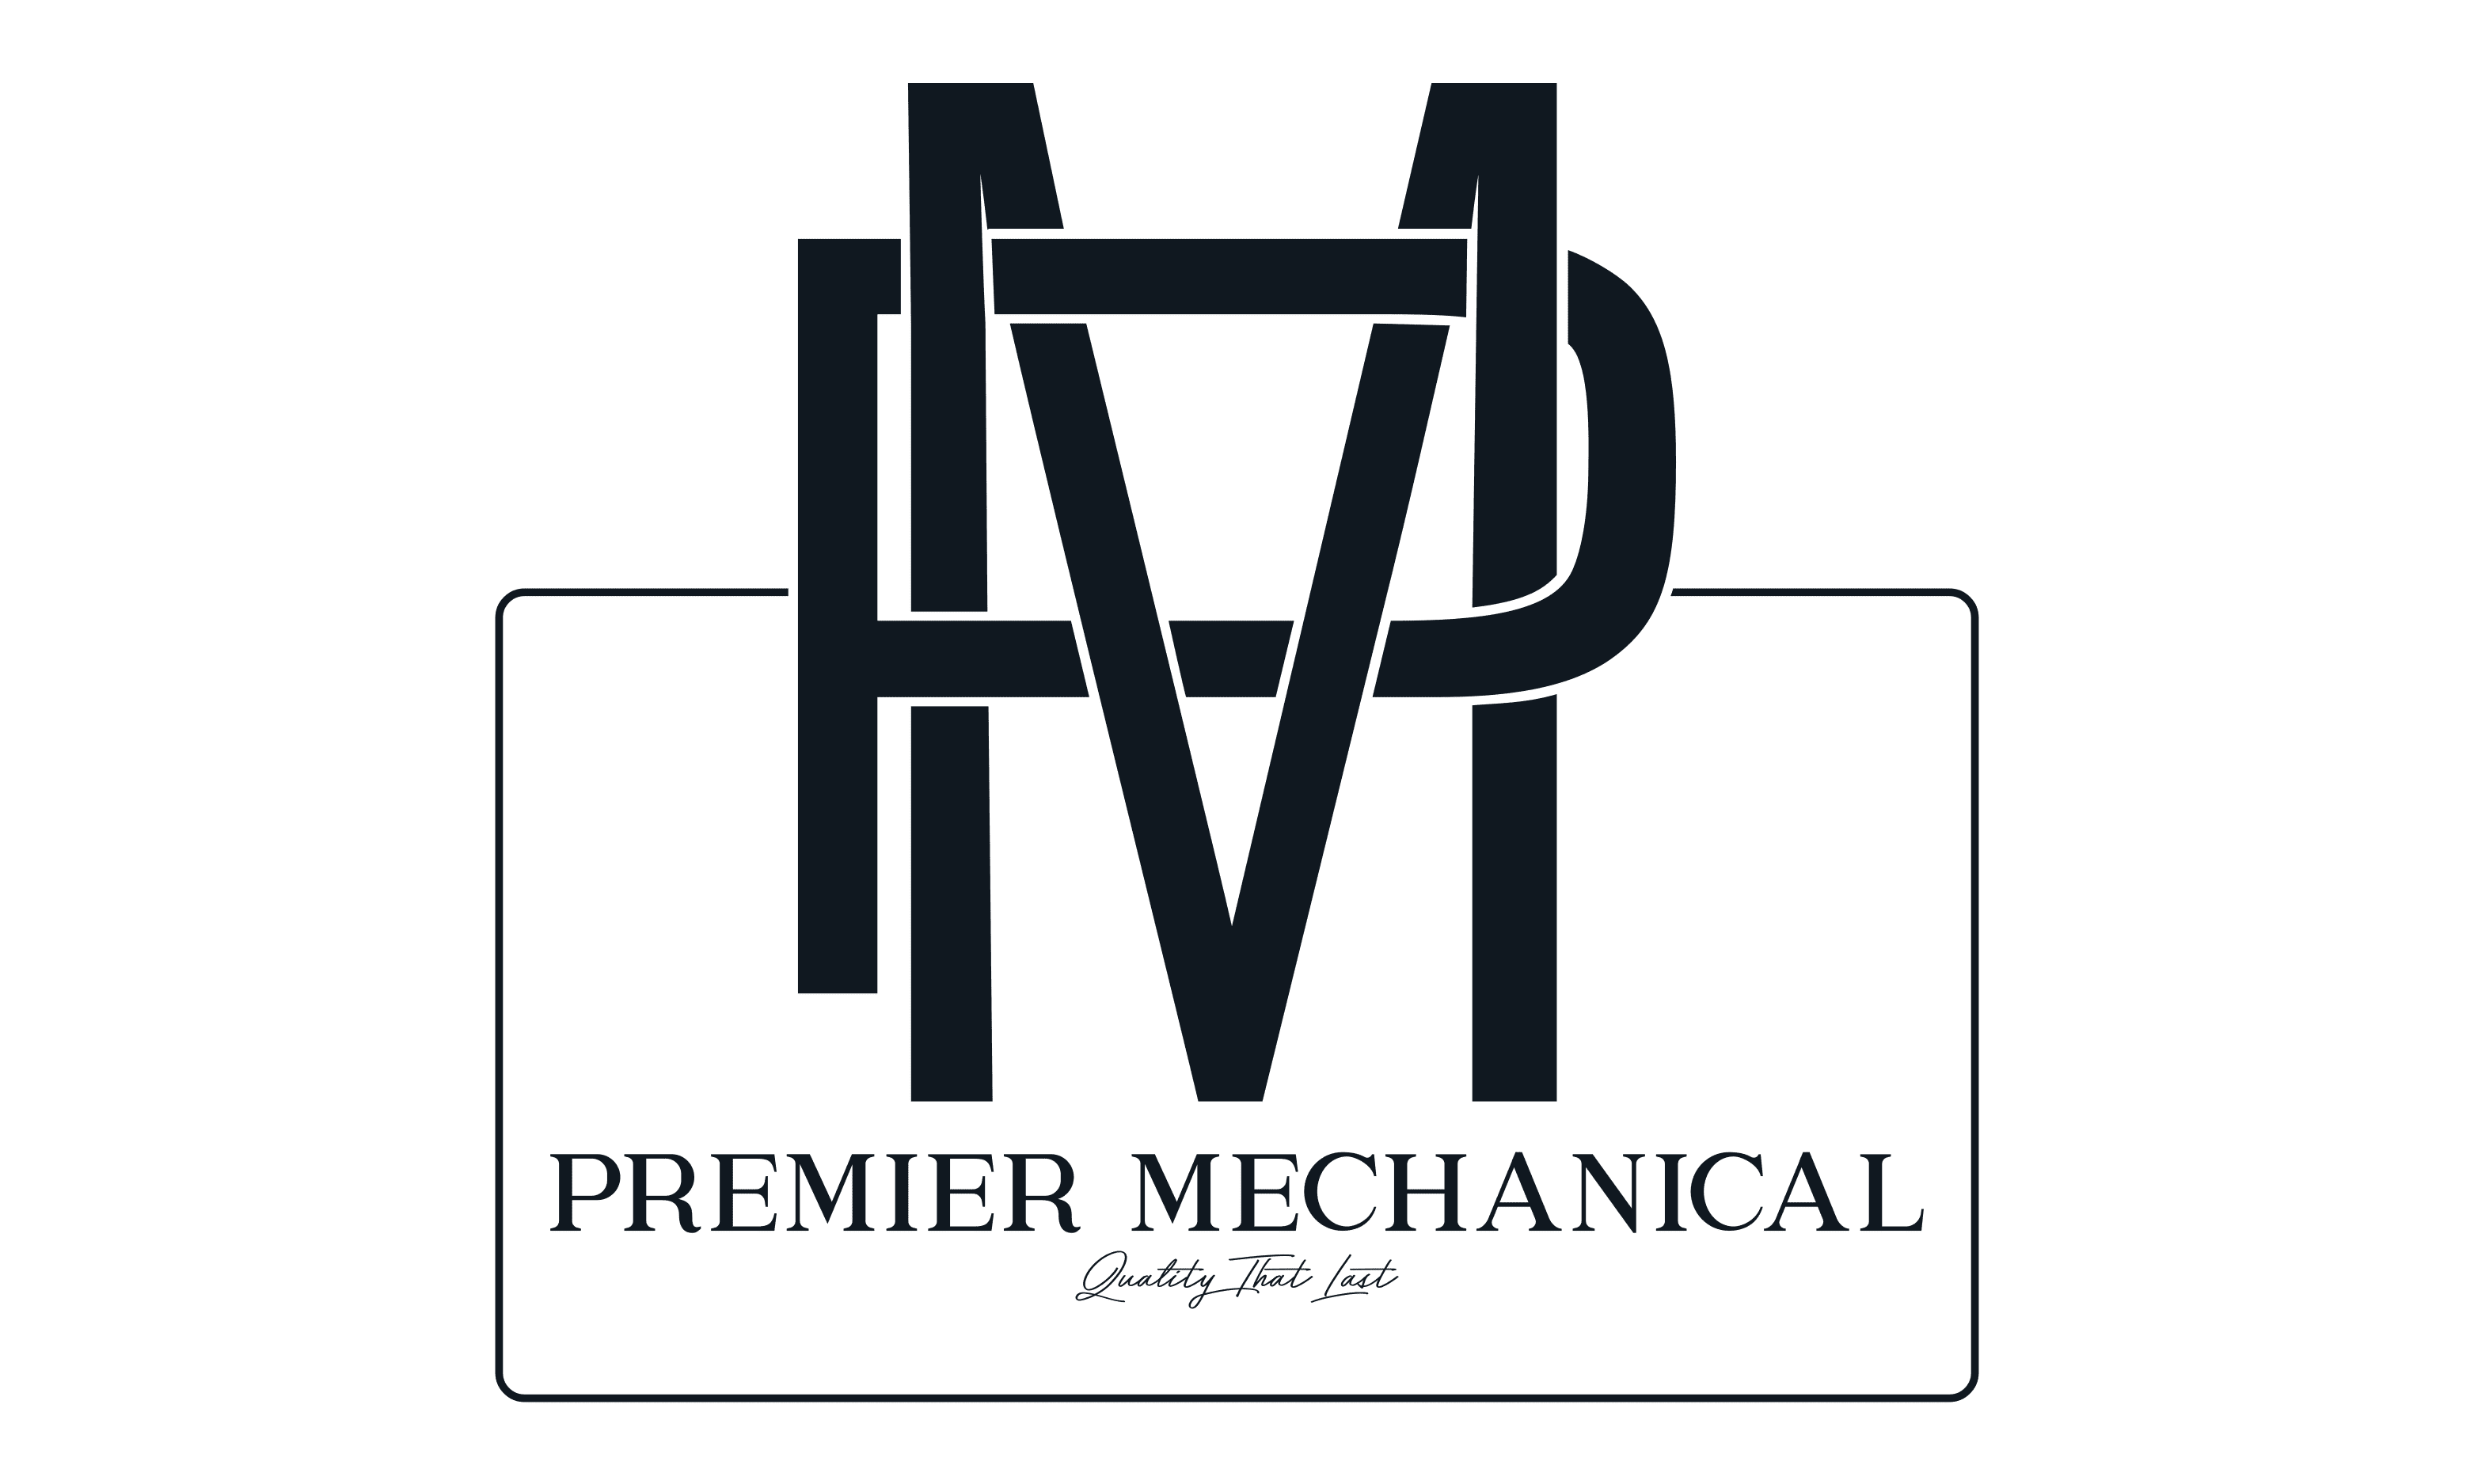 Premier Mechanical